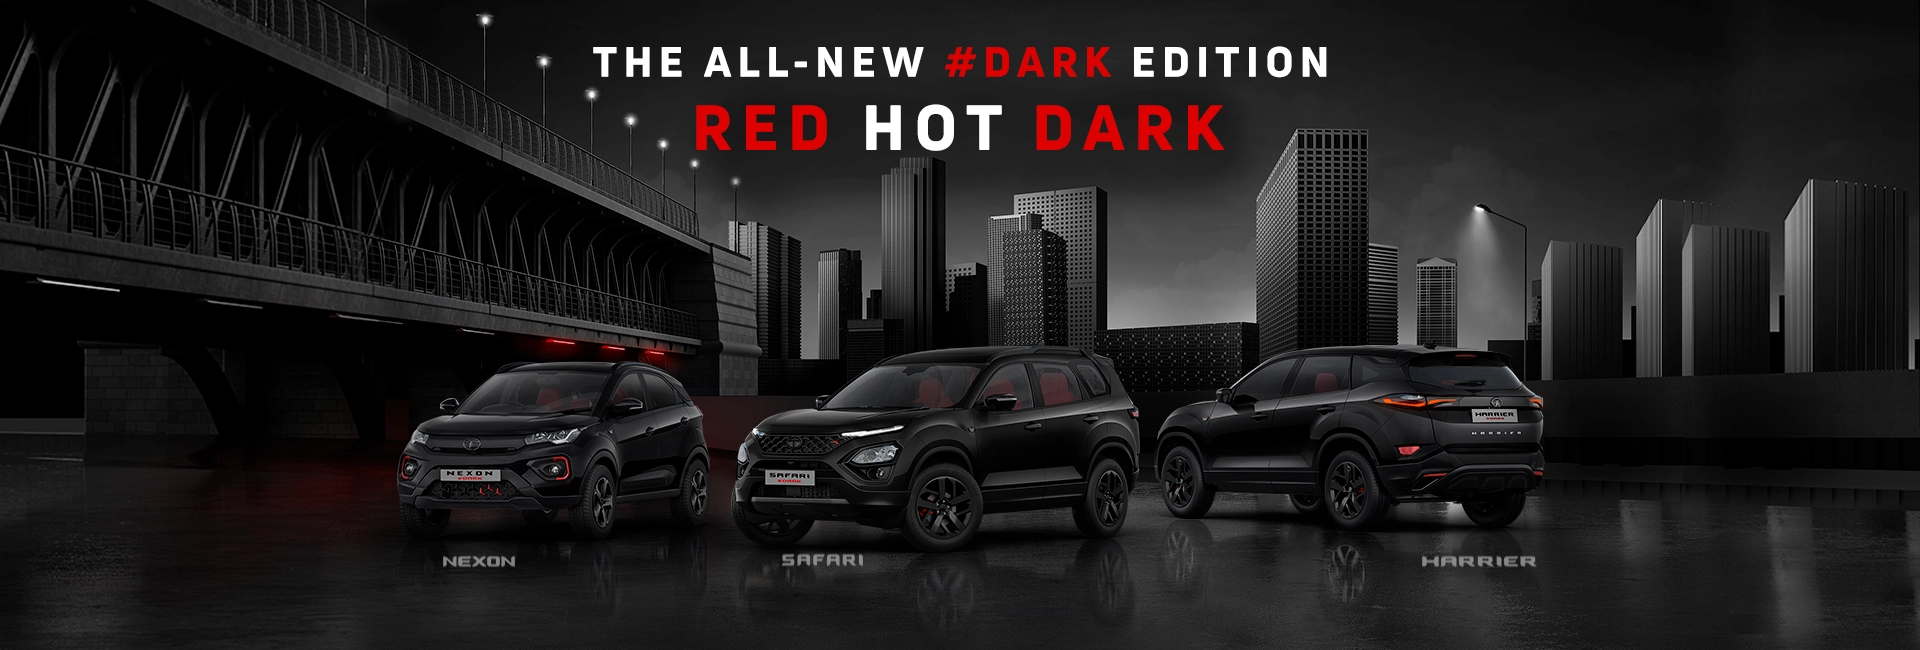 Red Hot Dark Edition